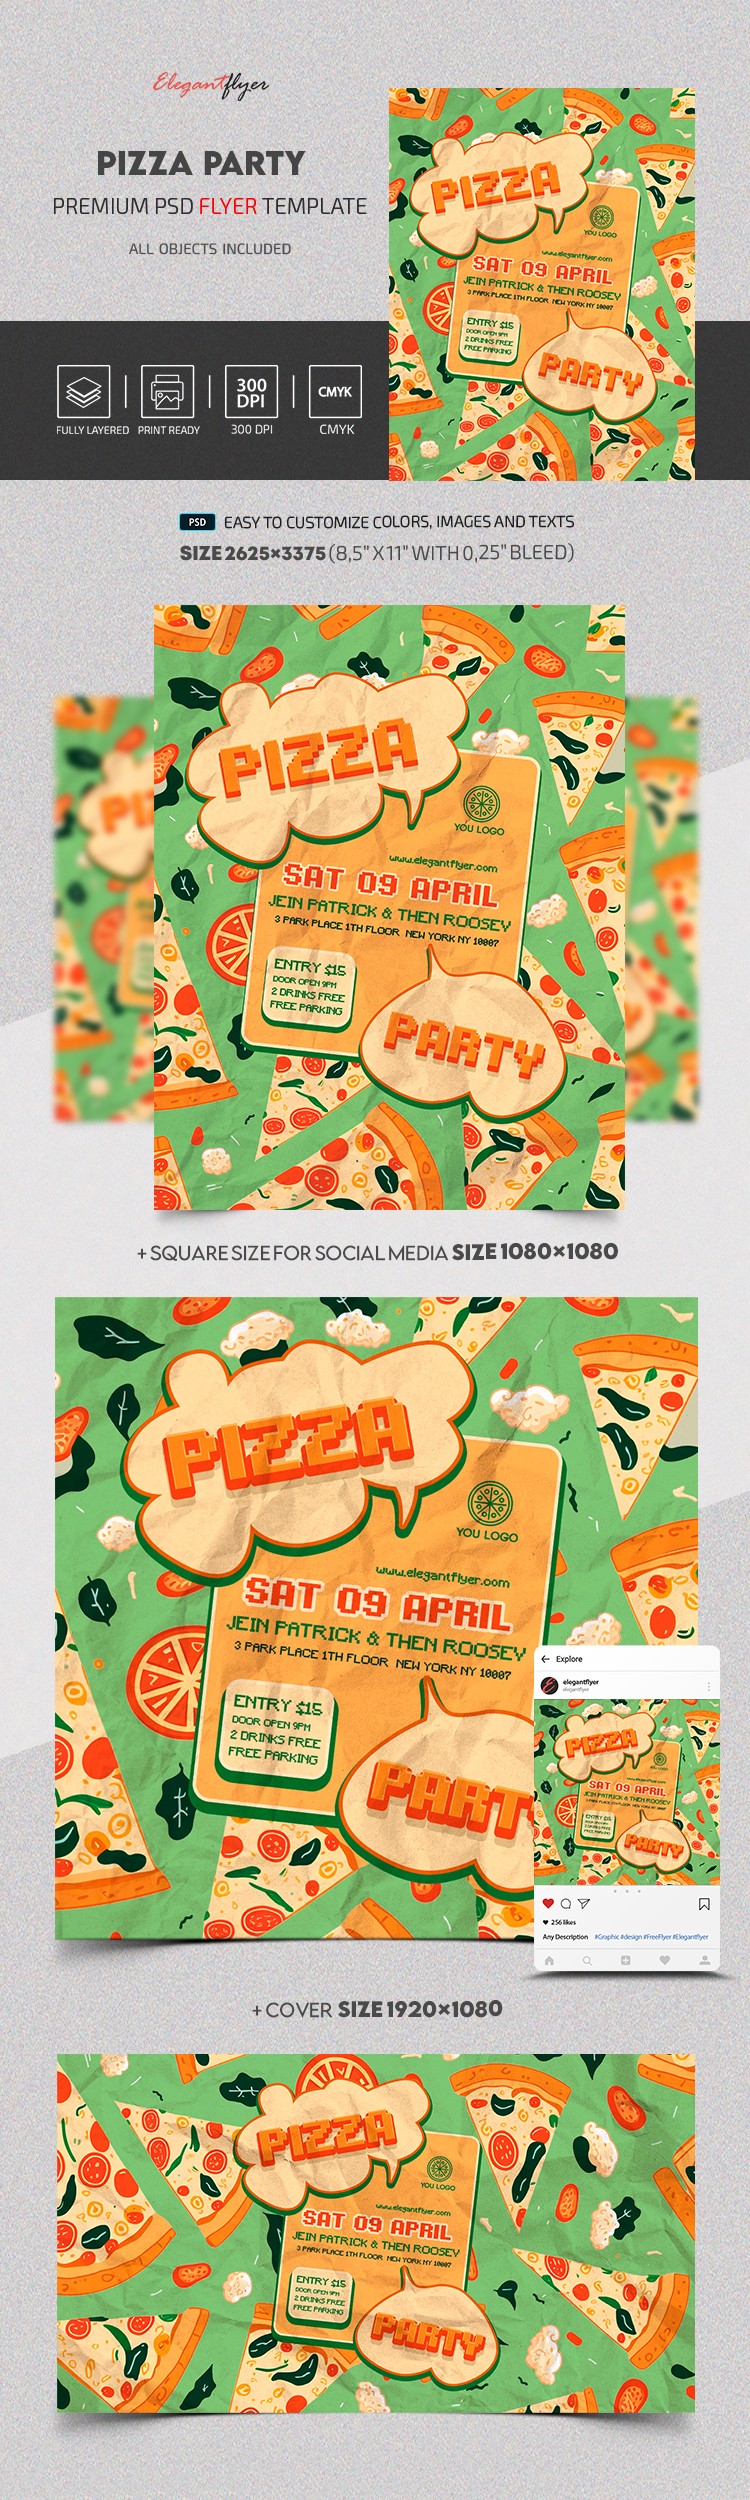 Festa da Pizza by ElegantFlyer